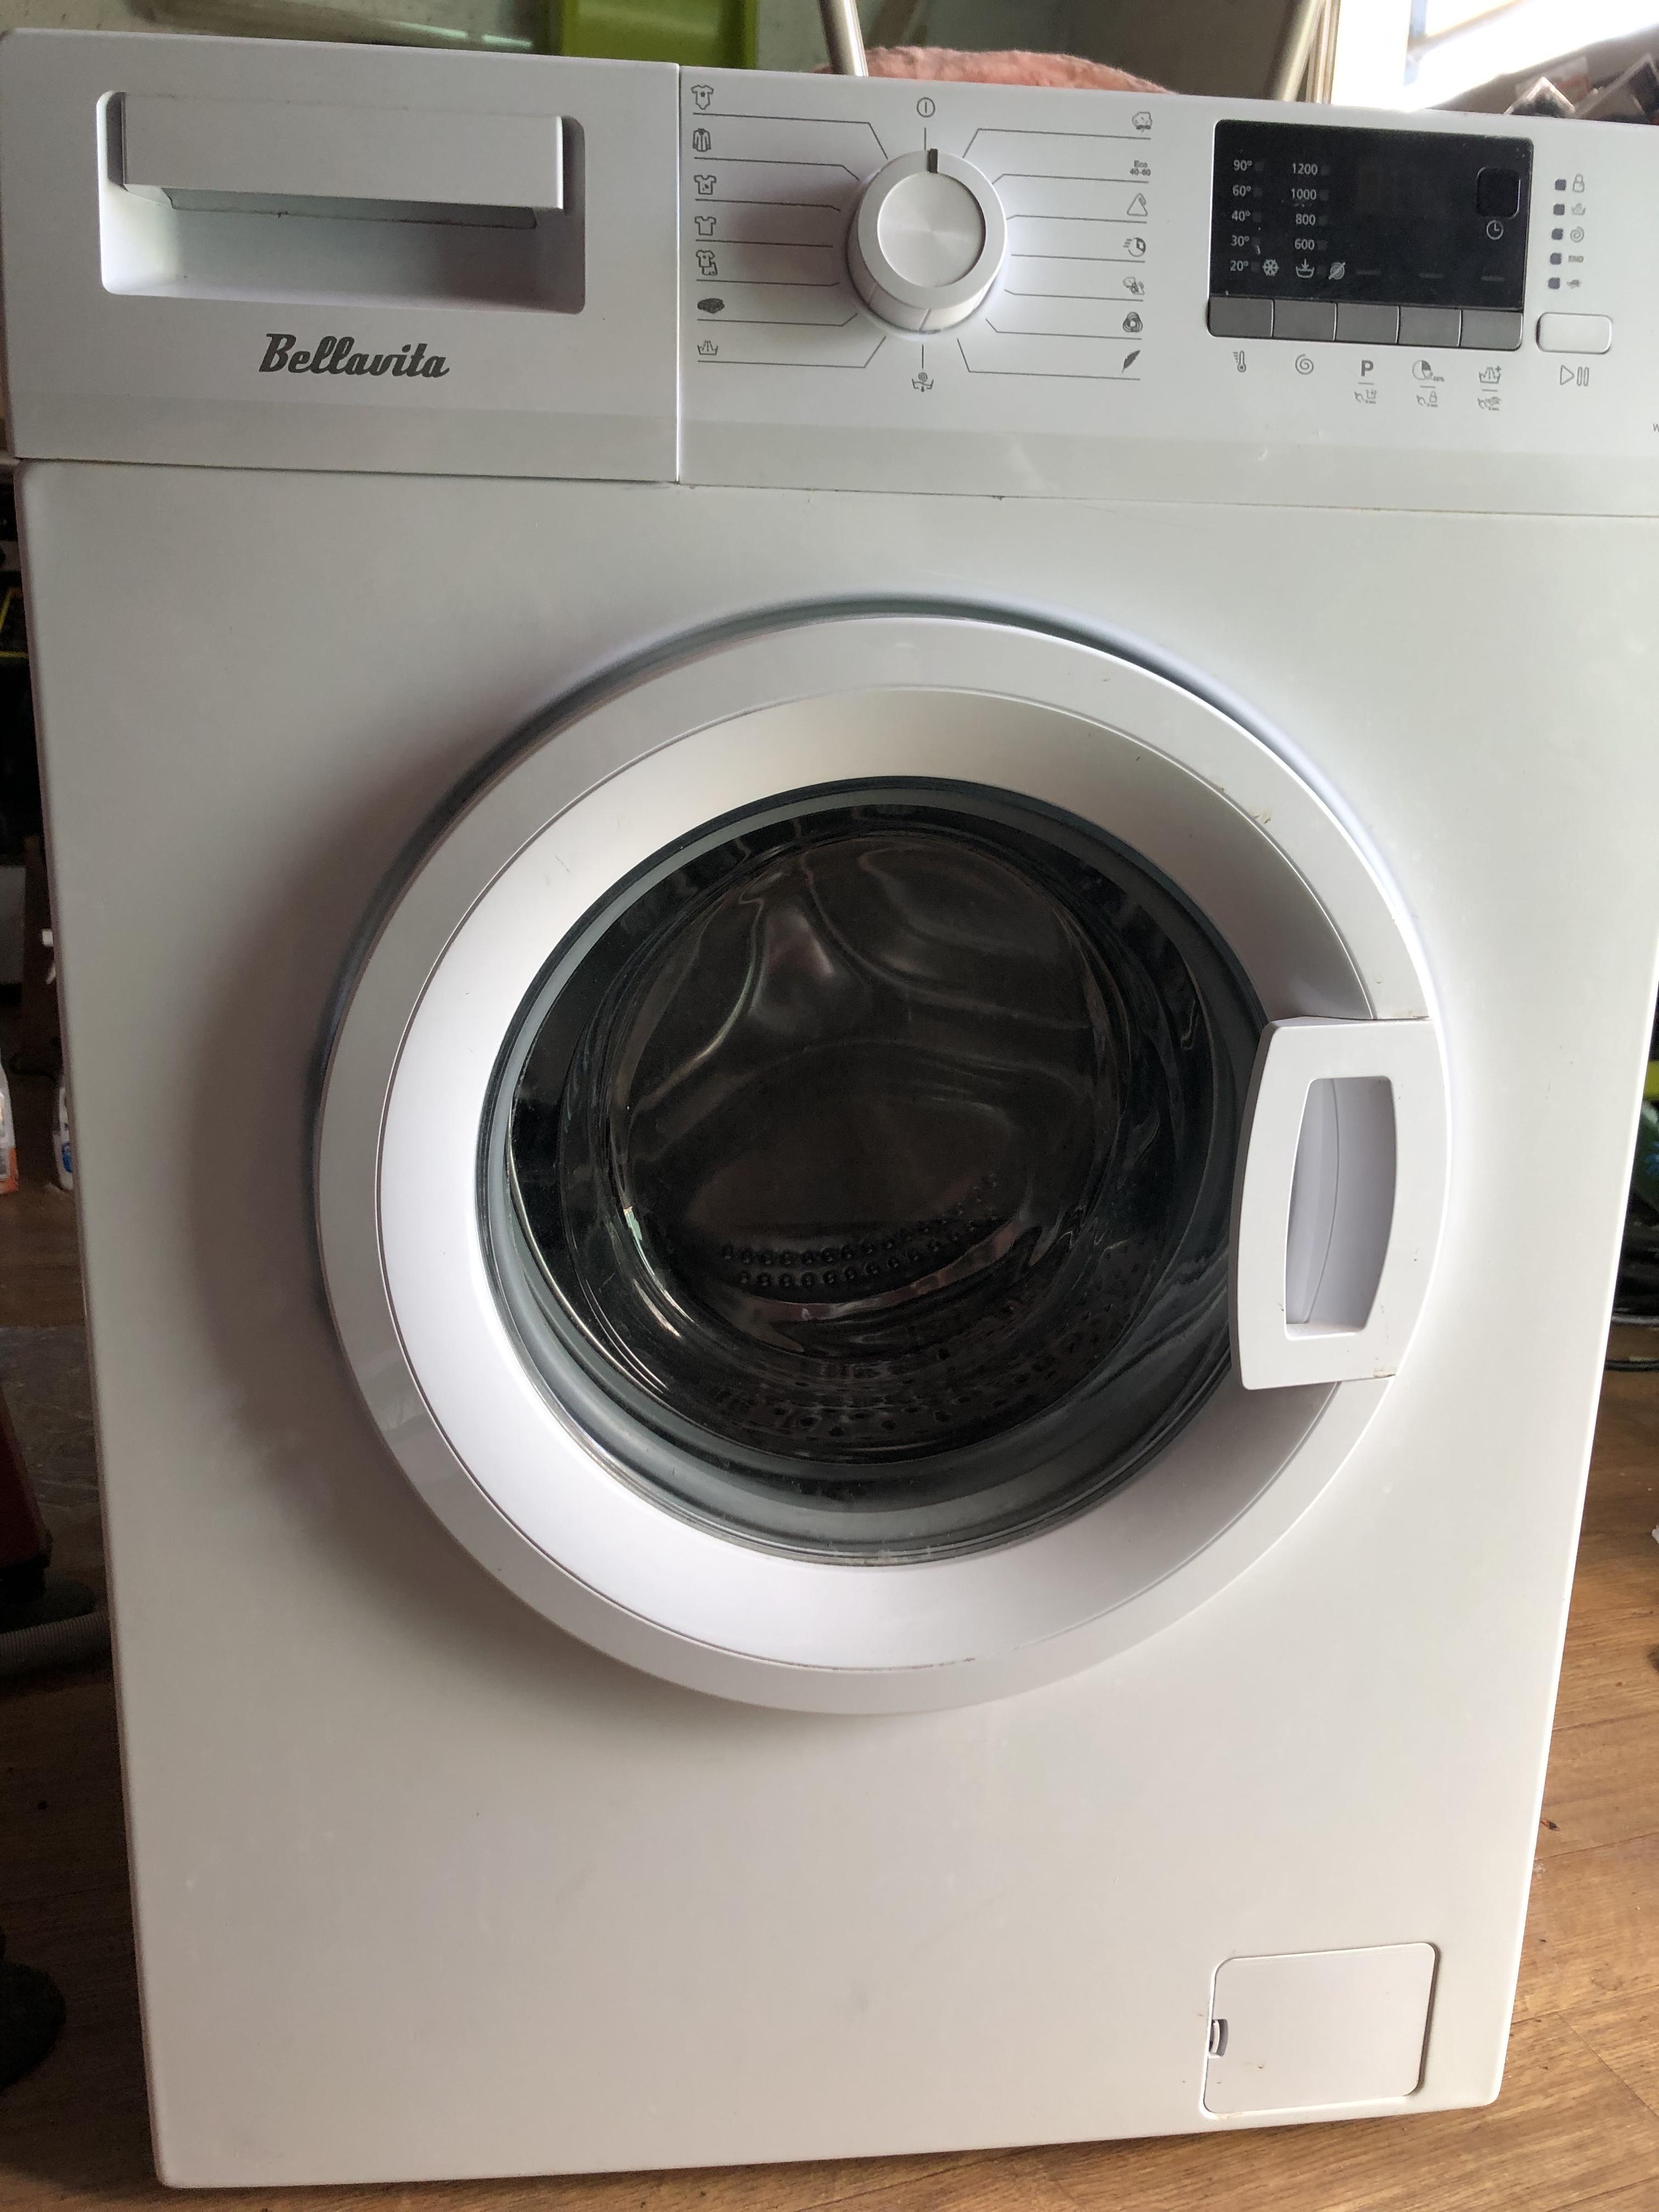 troc de troc machine à laver bellavita 7kg image 0